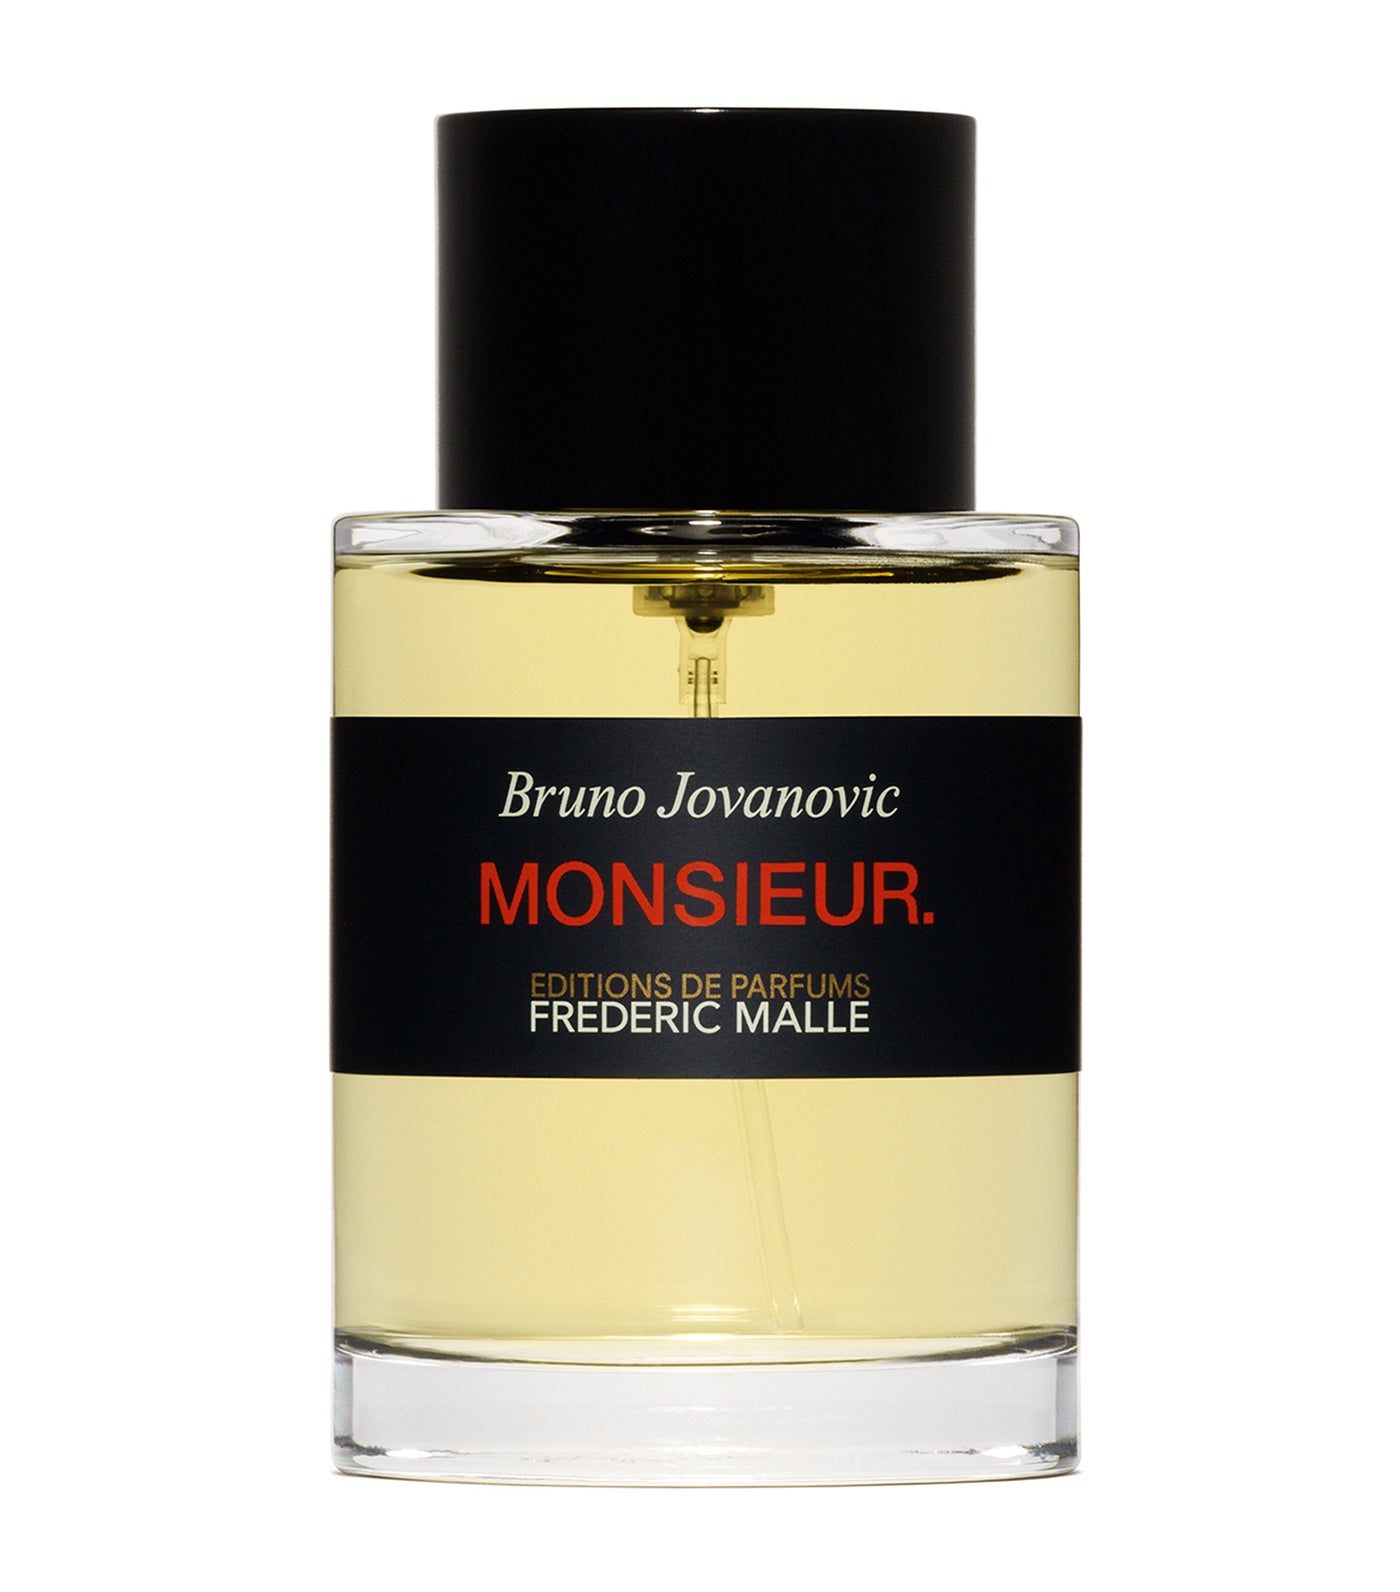 Monsieur. Perfume by Bruno Jovanovic